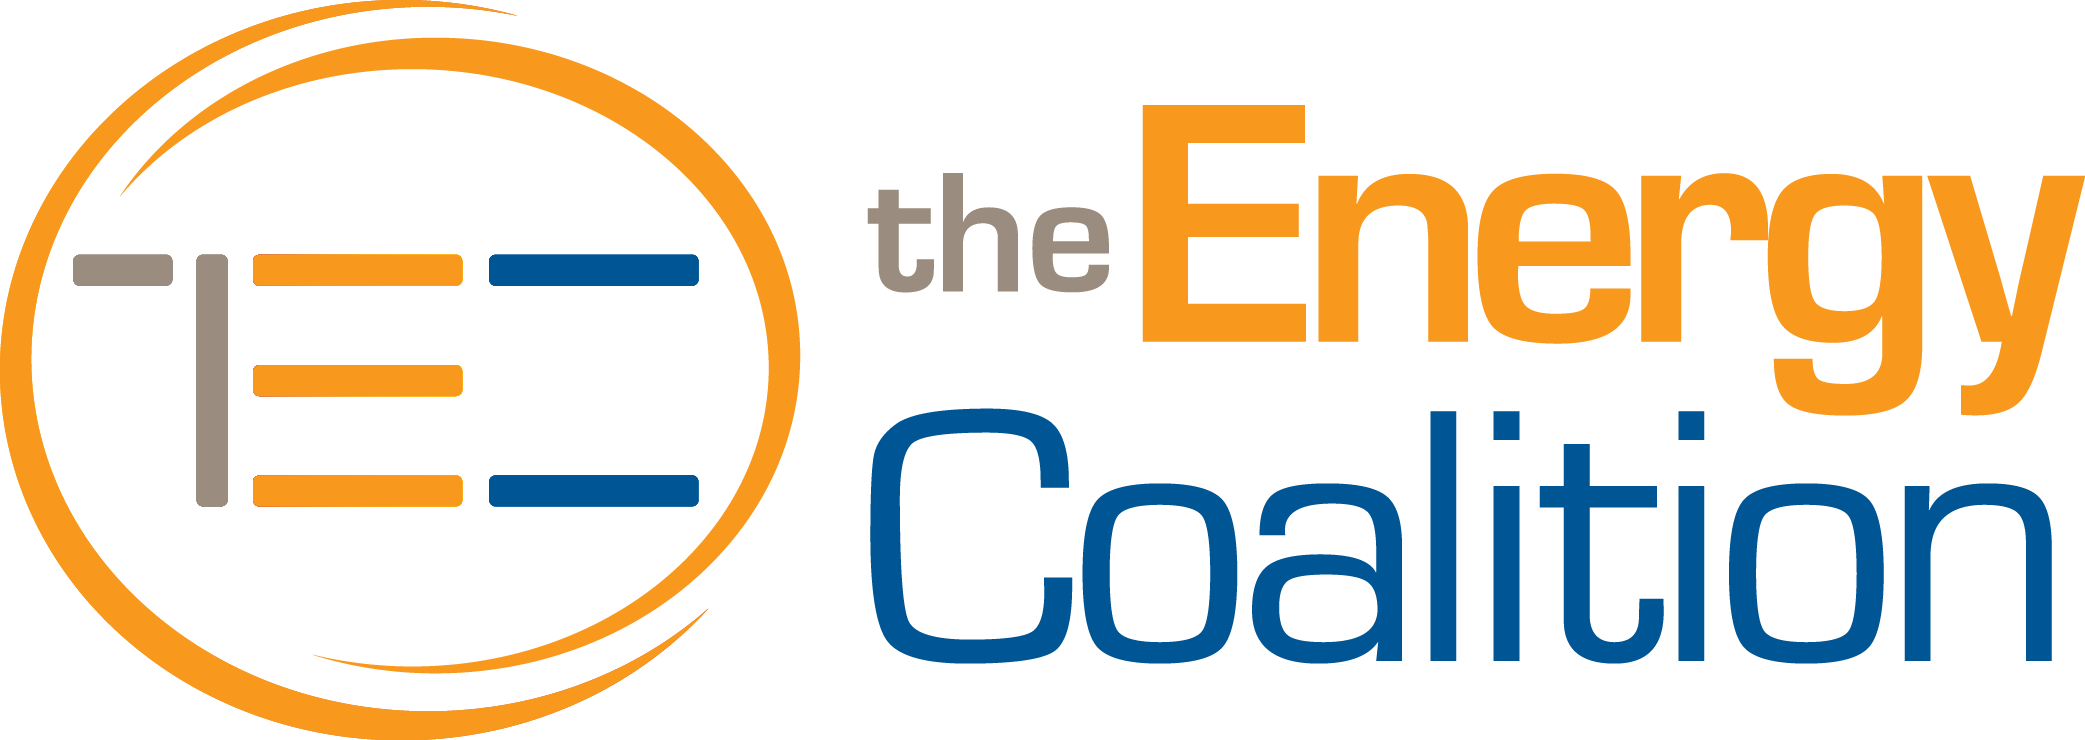 The Energy Coalition_logo transparent.jpg